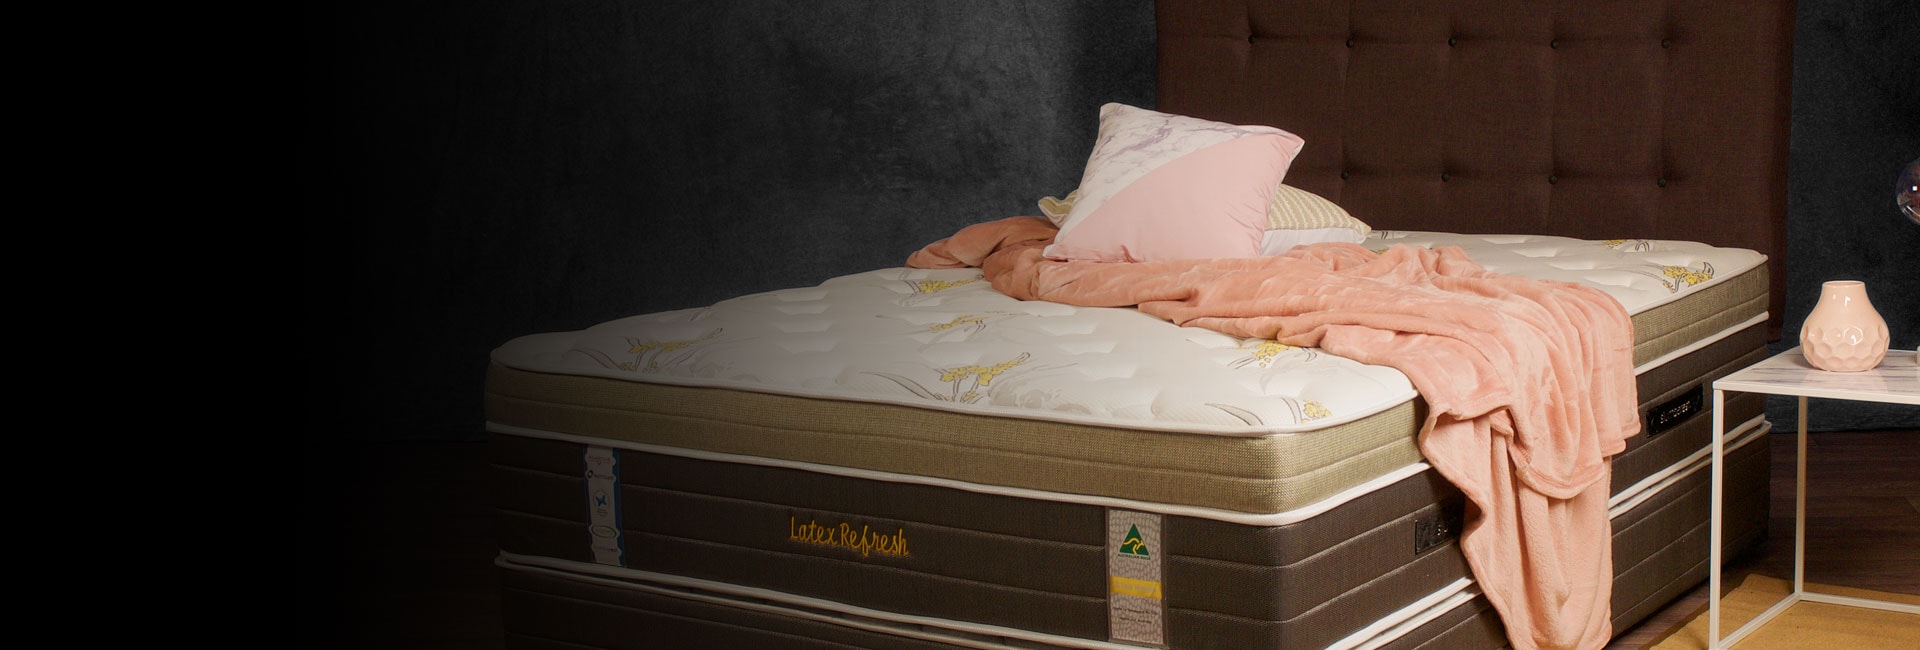 slumberest caravan mattress reviews